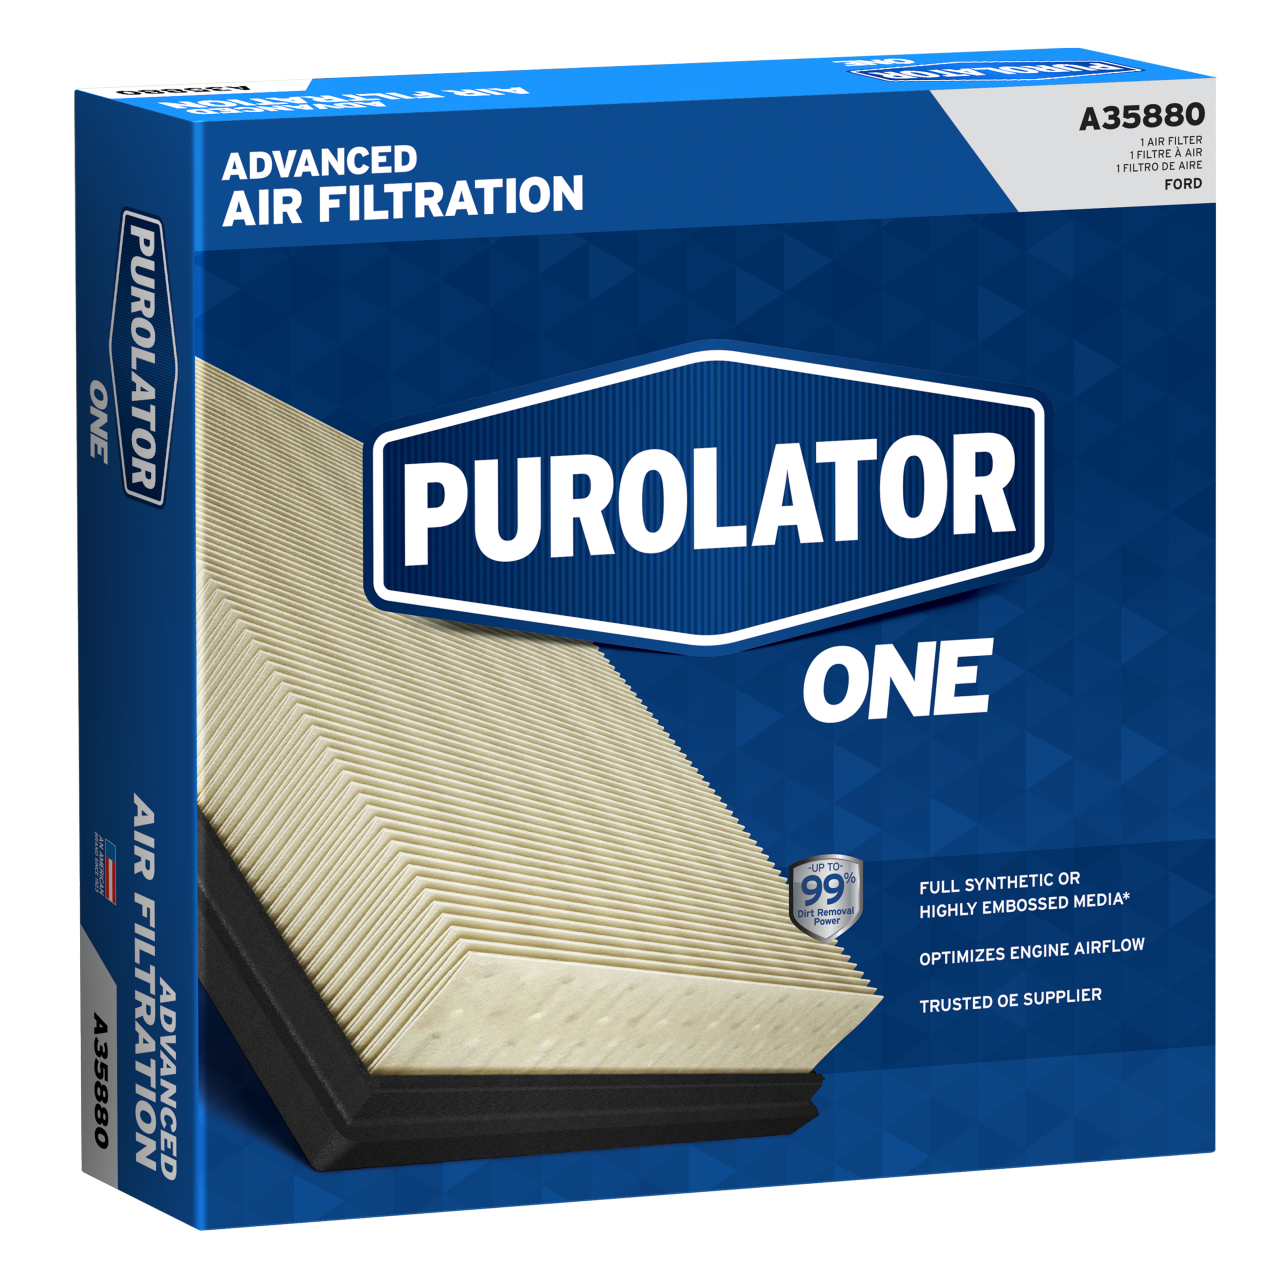 https://www.purolatornow.com/content/dam/website/purolator/product-pages/one-air/ONE_Air_Box_4000x4000.png.transform/w.1280/image.png